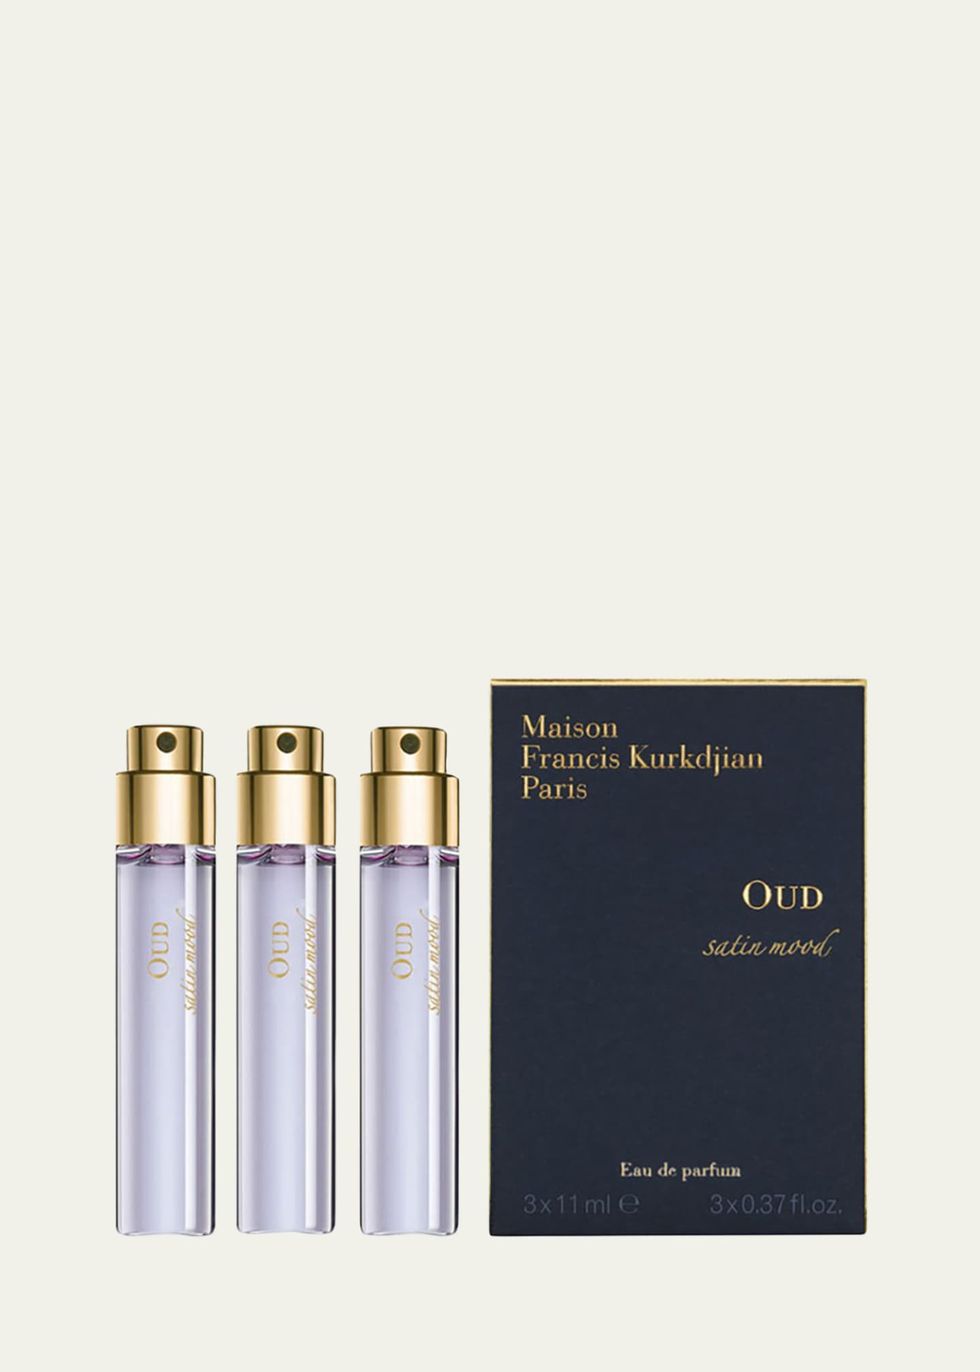 Oud Satin Mood Eau de Parfum Travel Spray Refills (Pack of 3)